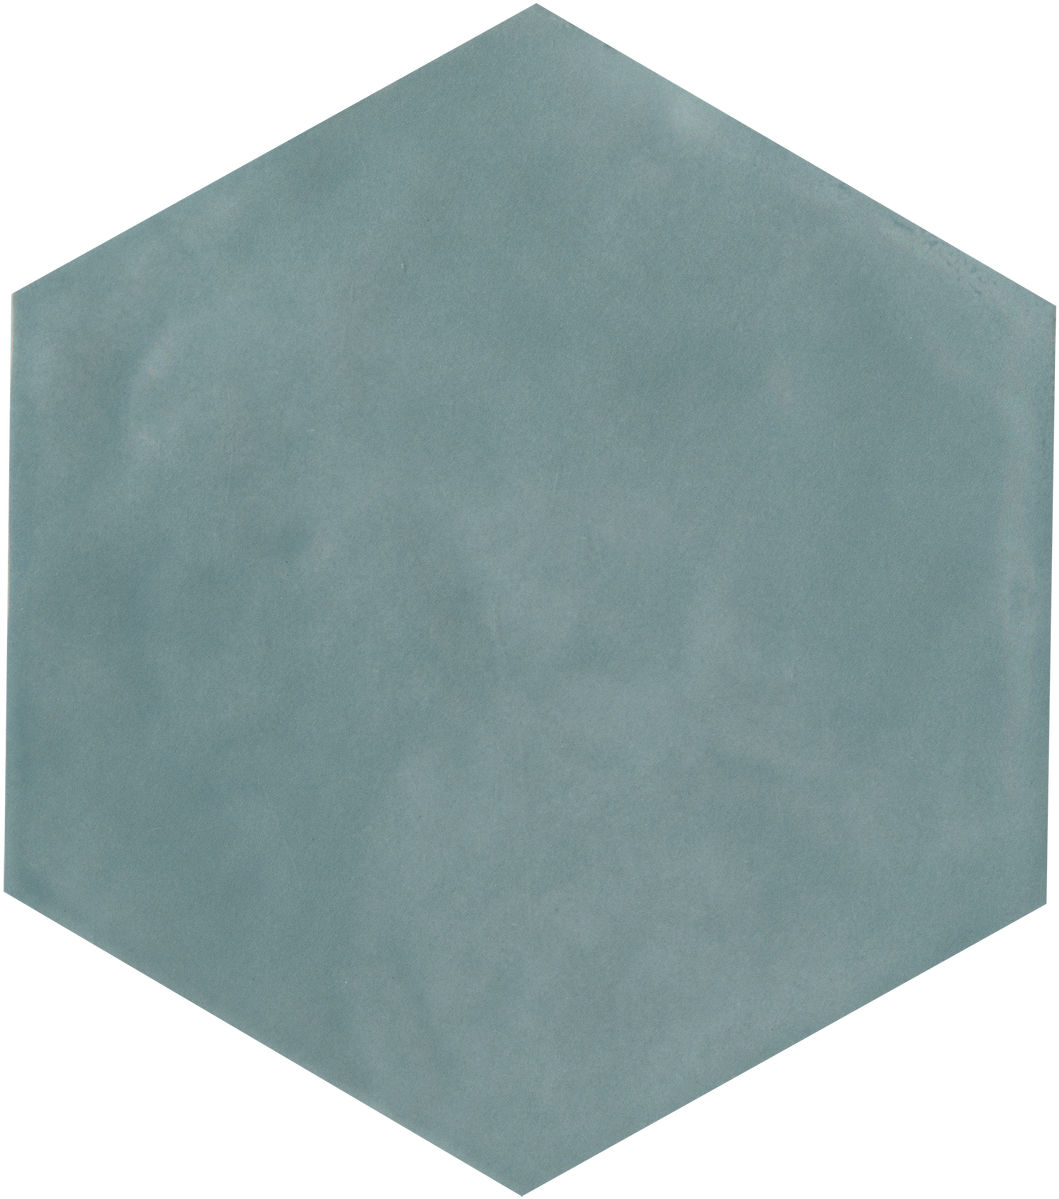 Blue Hexagon Texture Background PNG